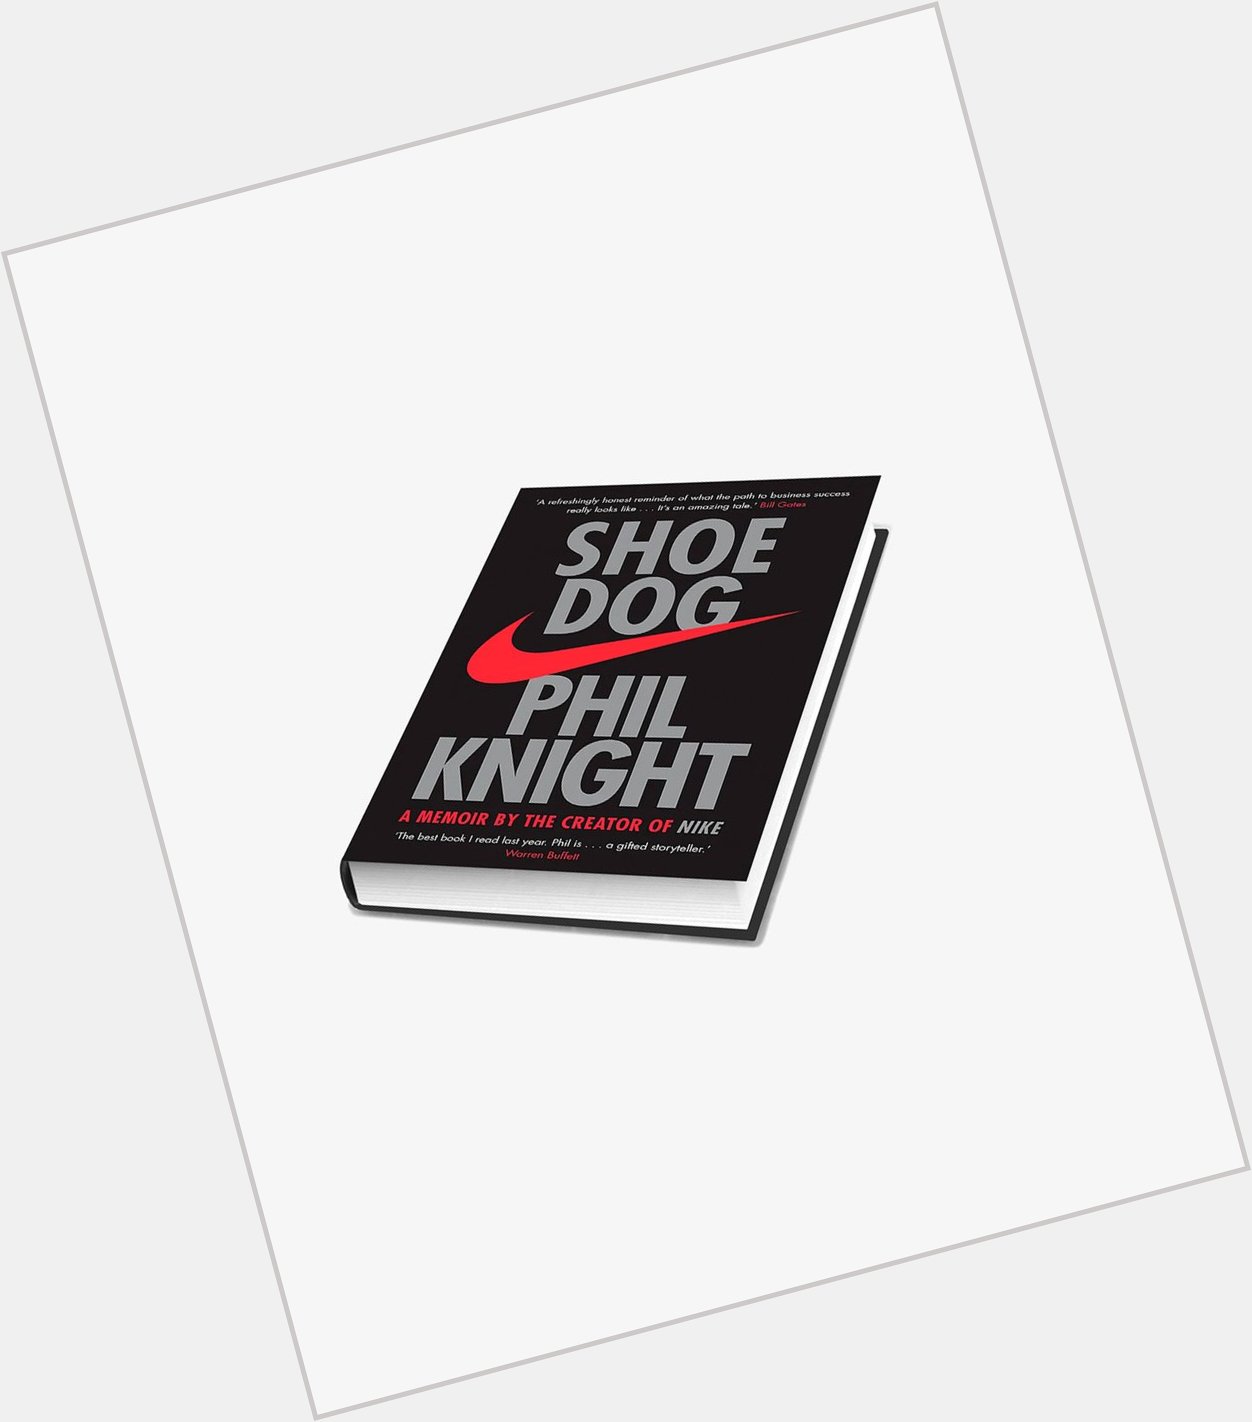 To Shoe Dog Phil Knight, Happy 84th Birthday 

Shop:  